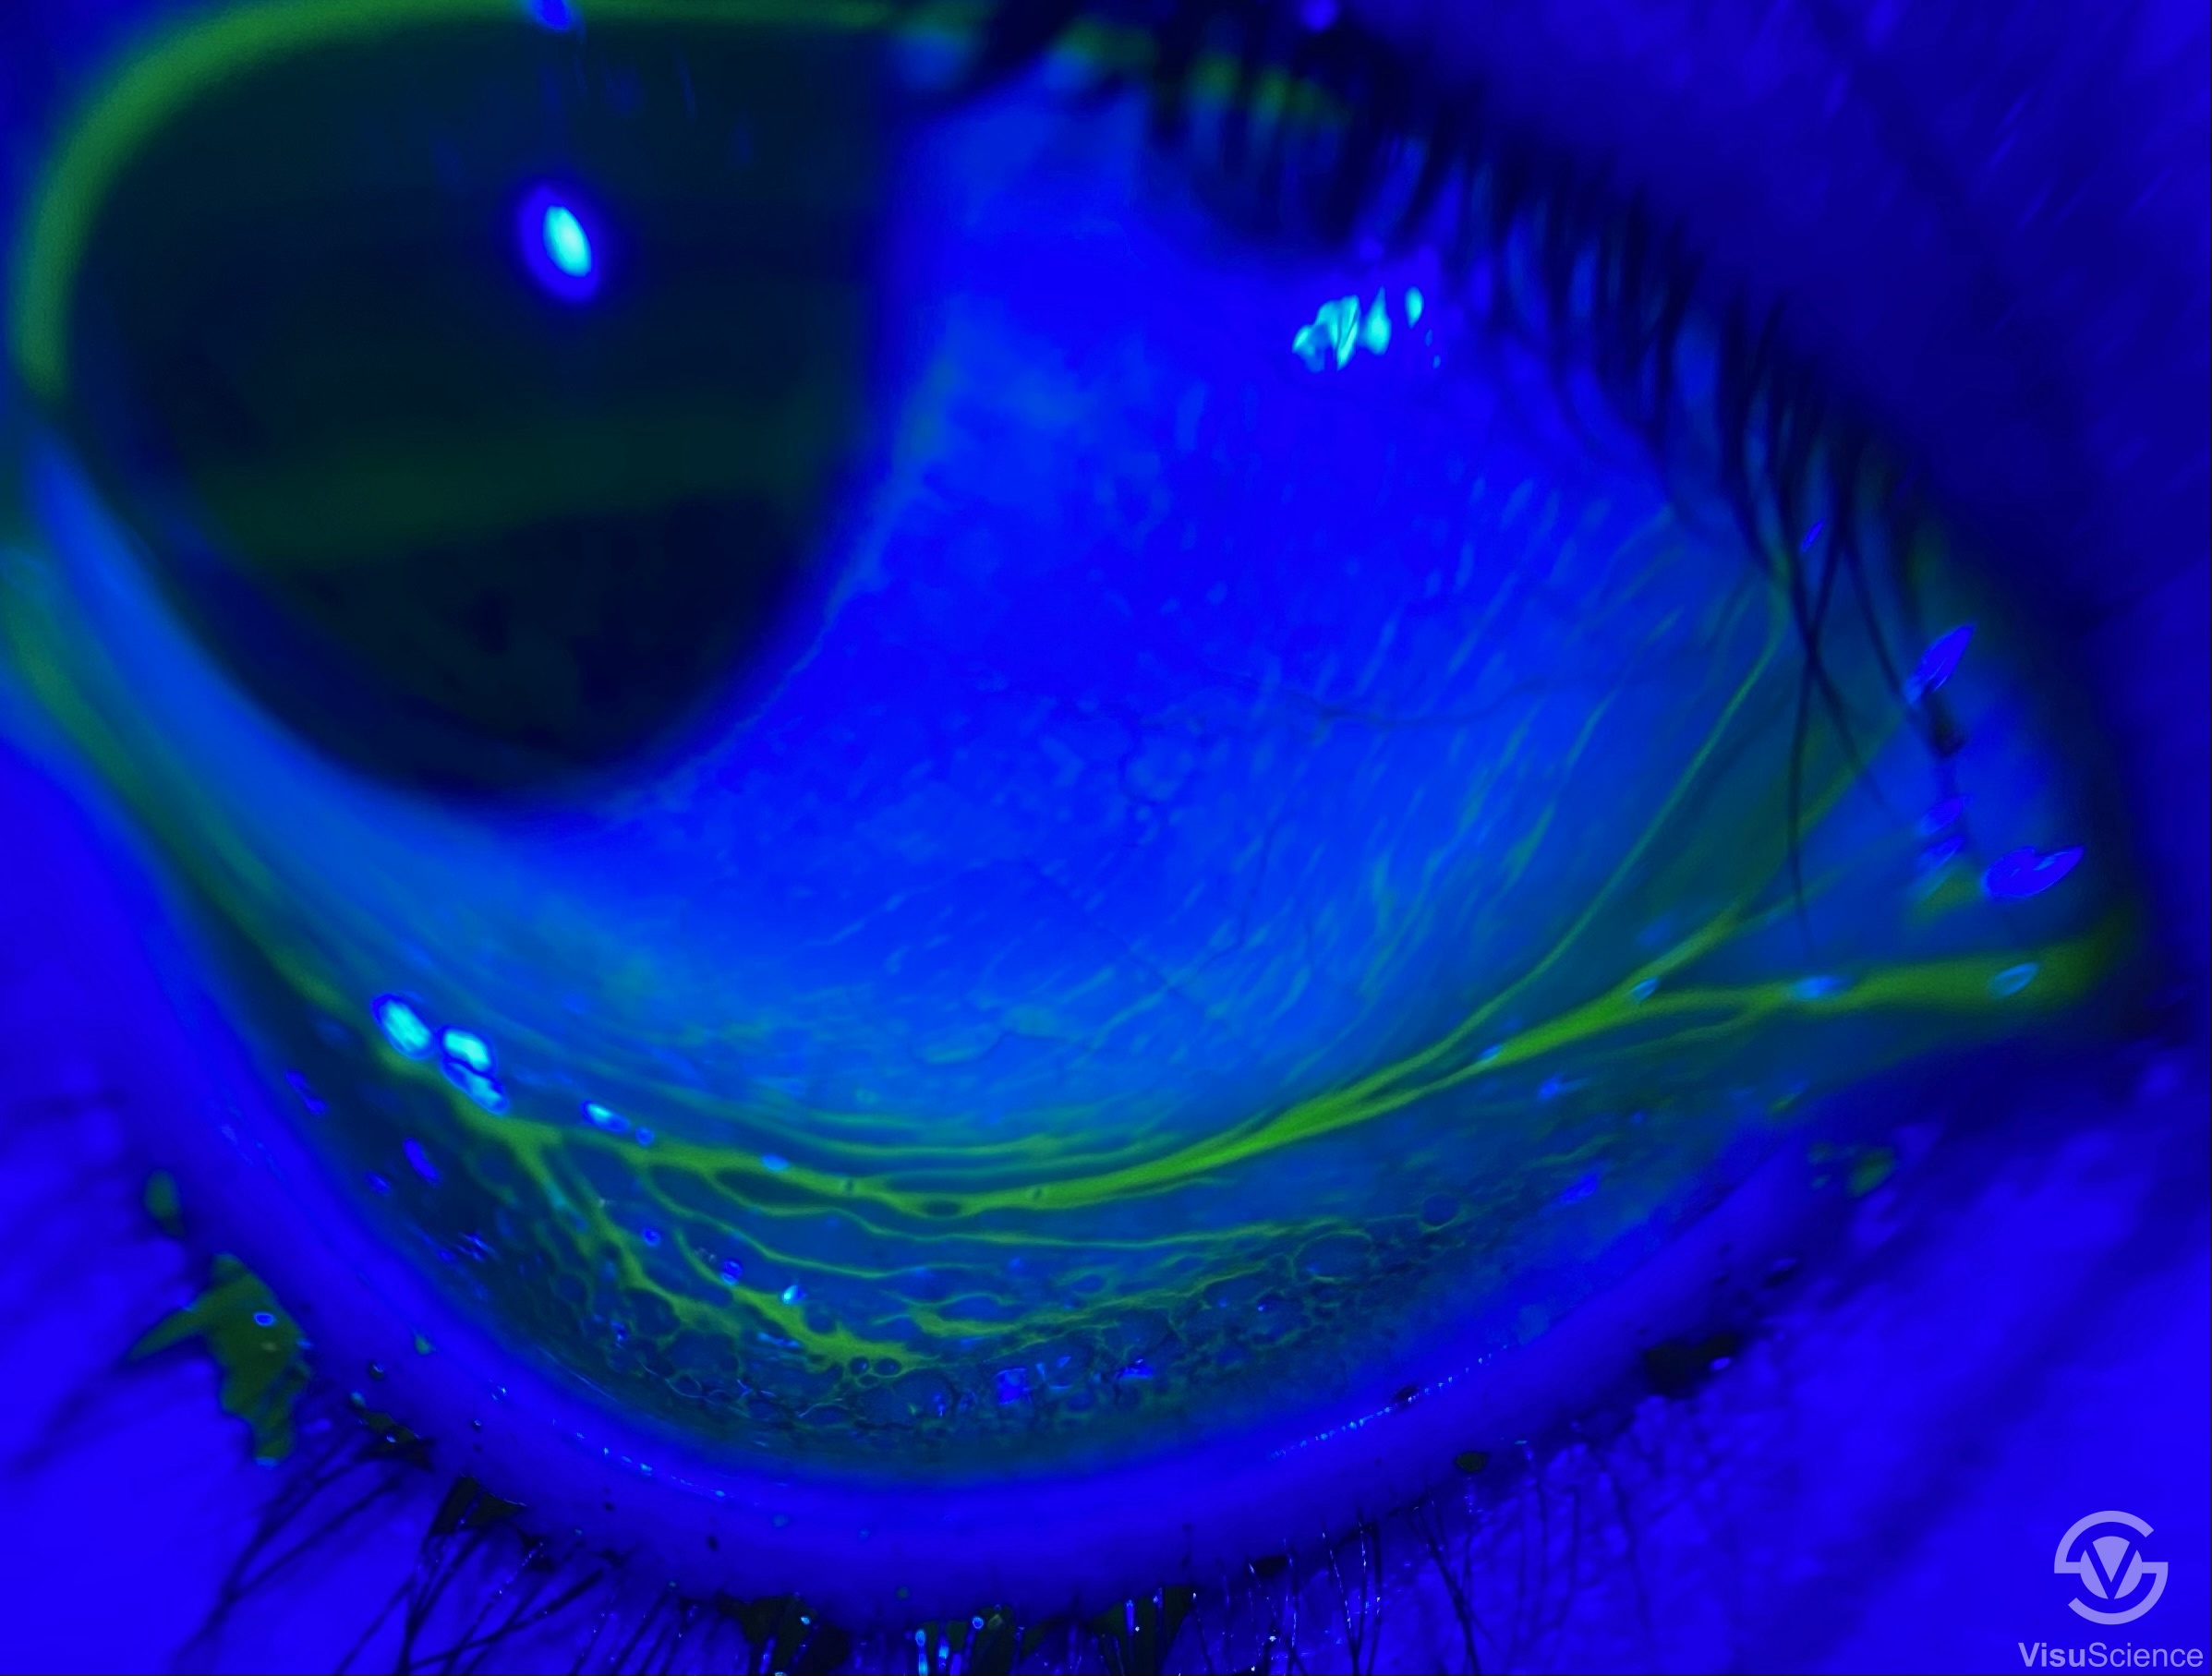 Cordelia fajance i dag Smartphone Eye Imaging Adapter - Products - VisuScience